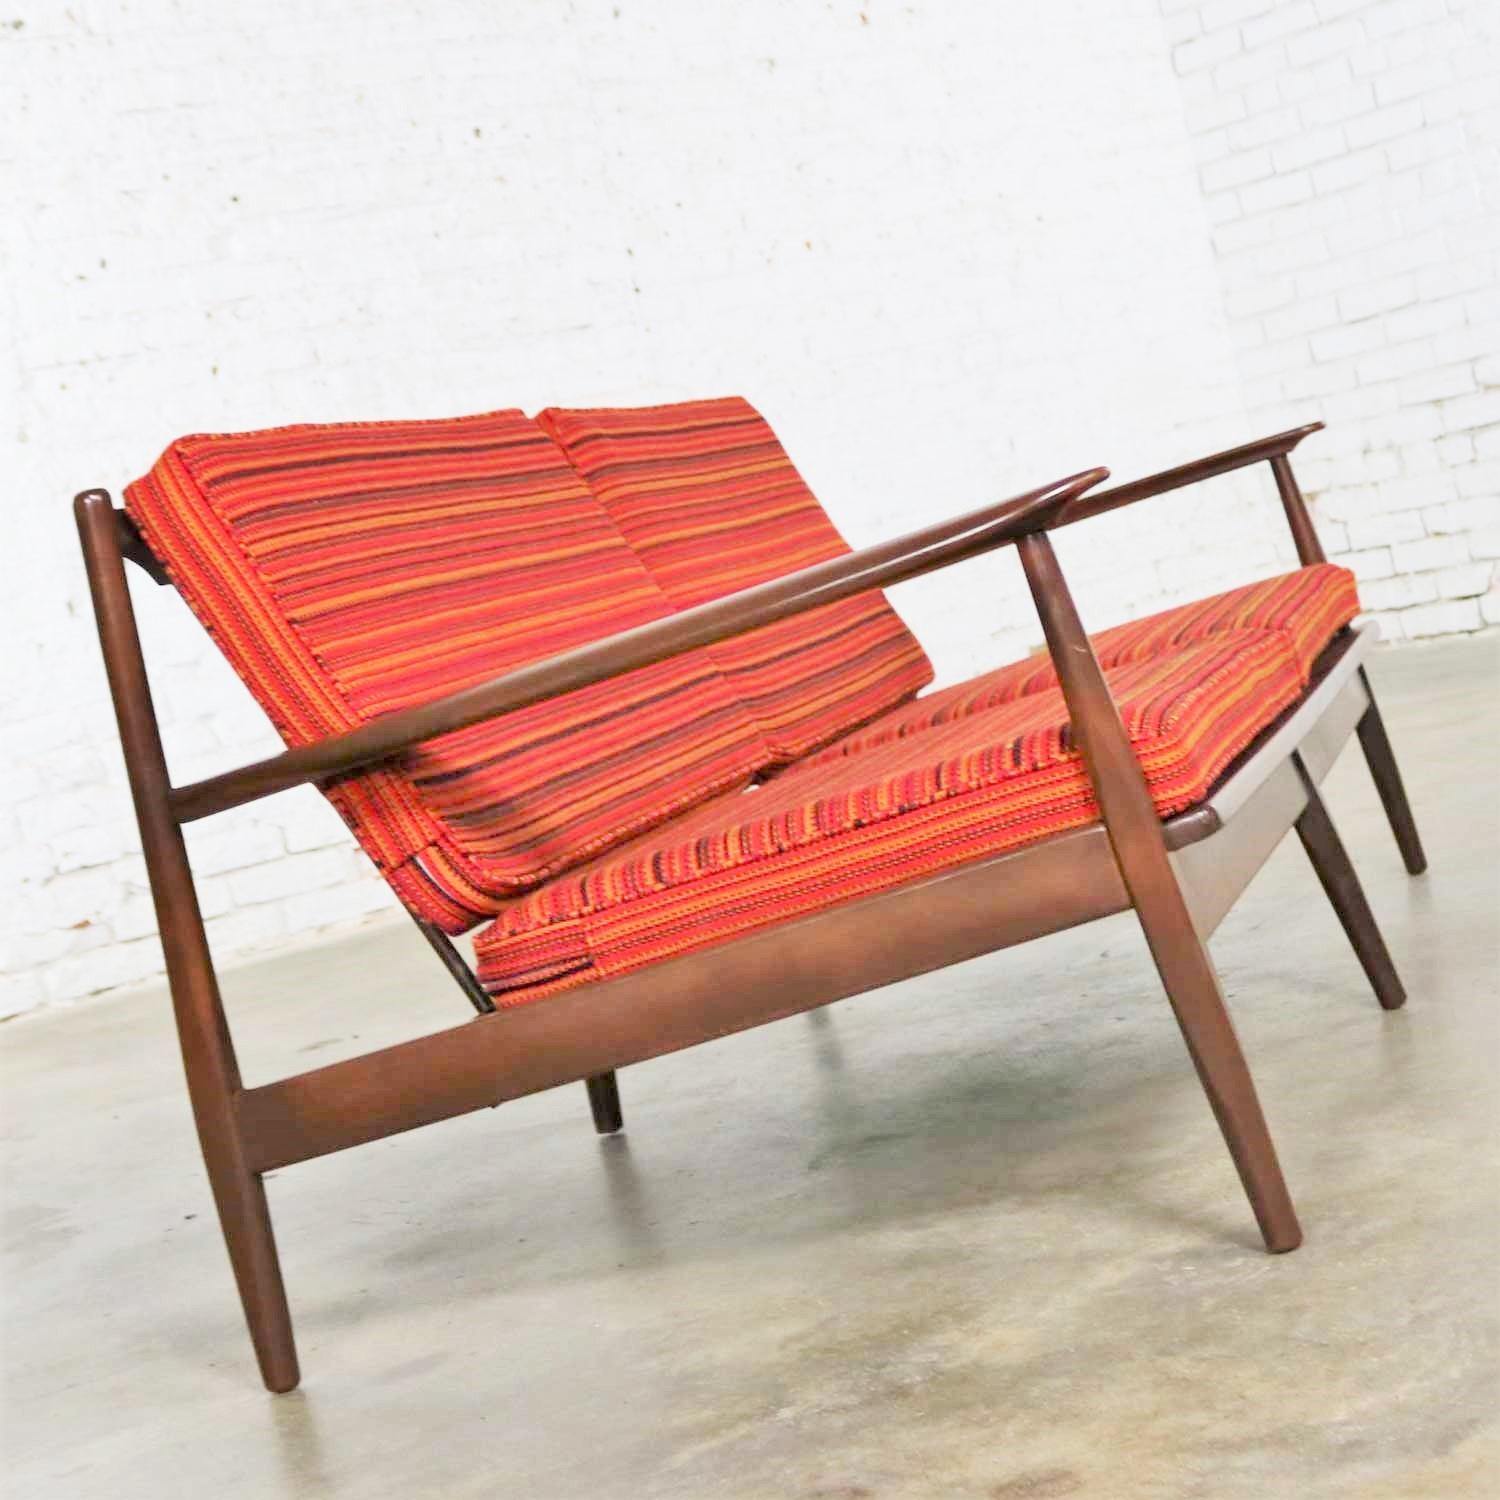 Fabric Danish or Scandinavian Modern Loose Cushion Sofa New Red Stripe Upholster